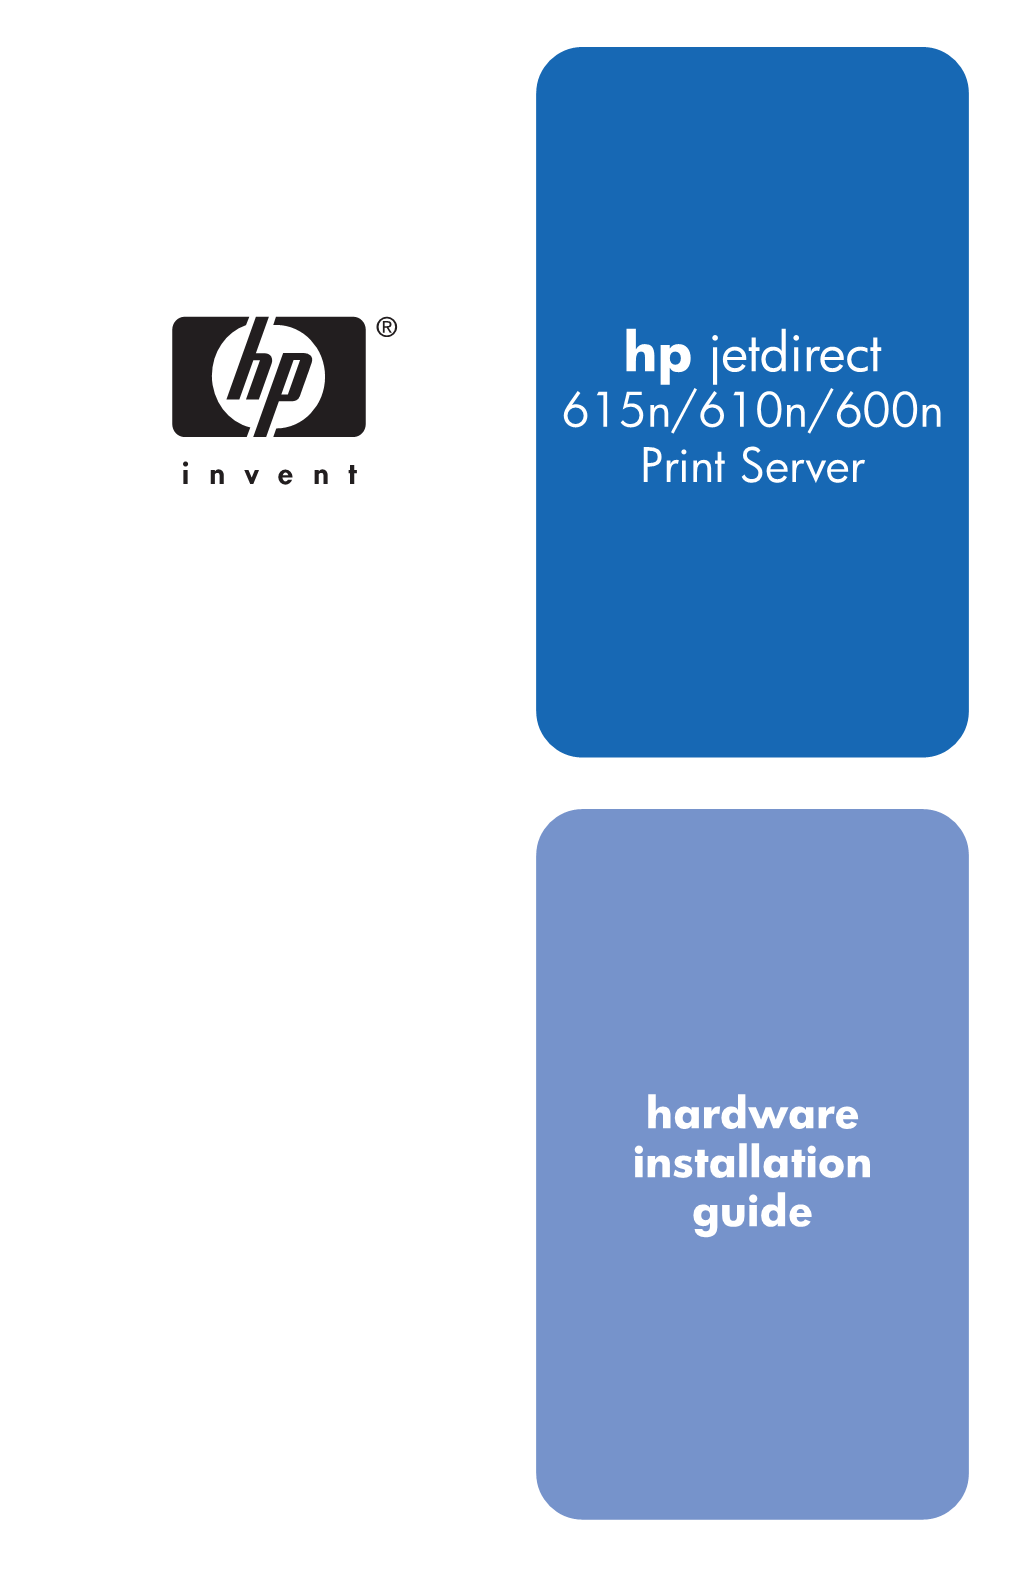 Hp Jetdirect 615N/610N/600N Print Server